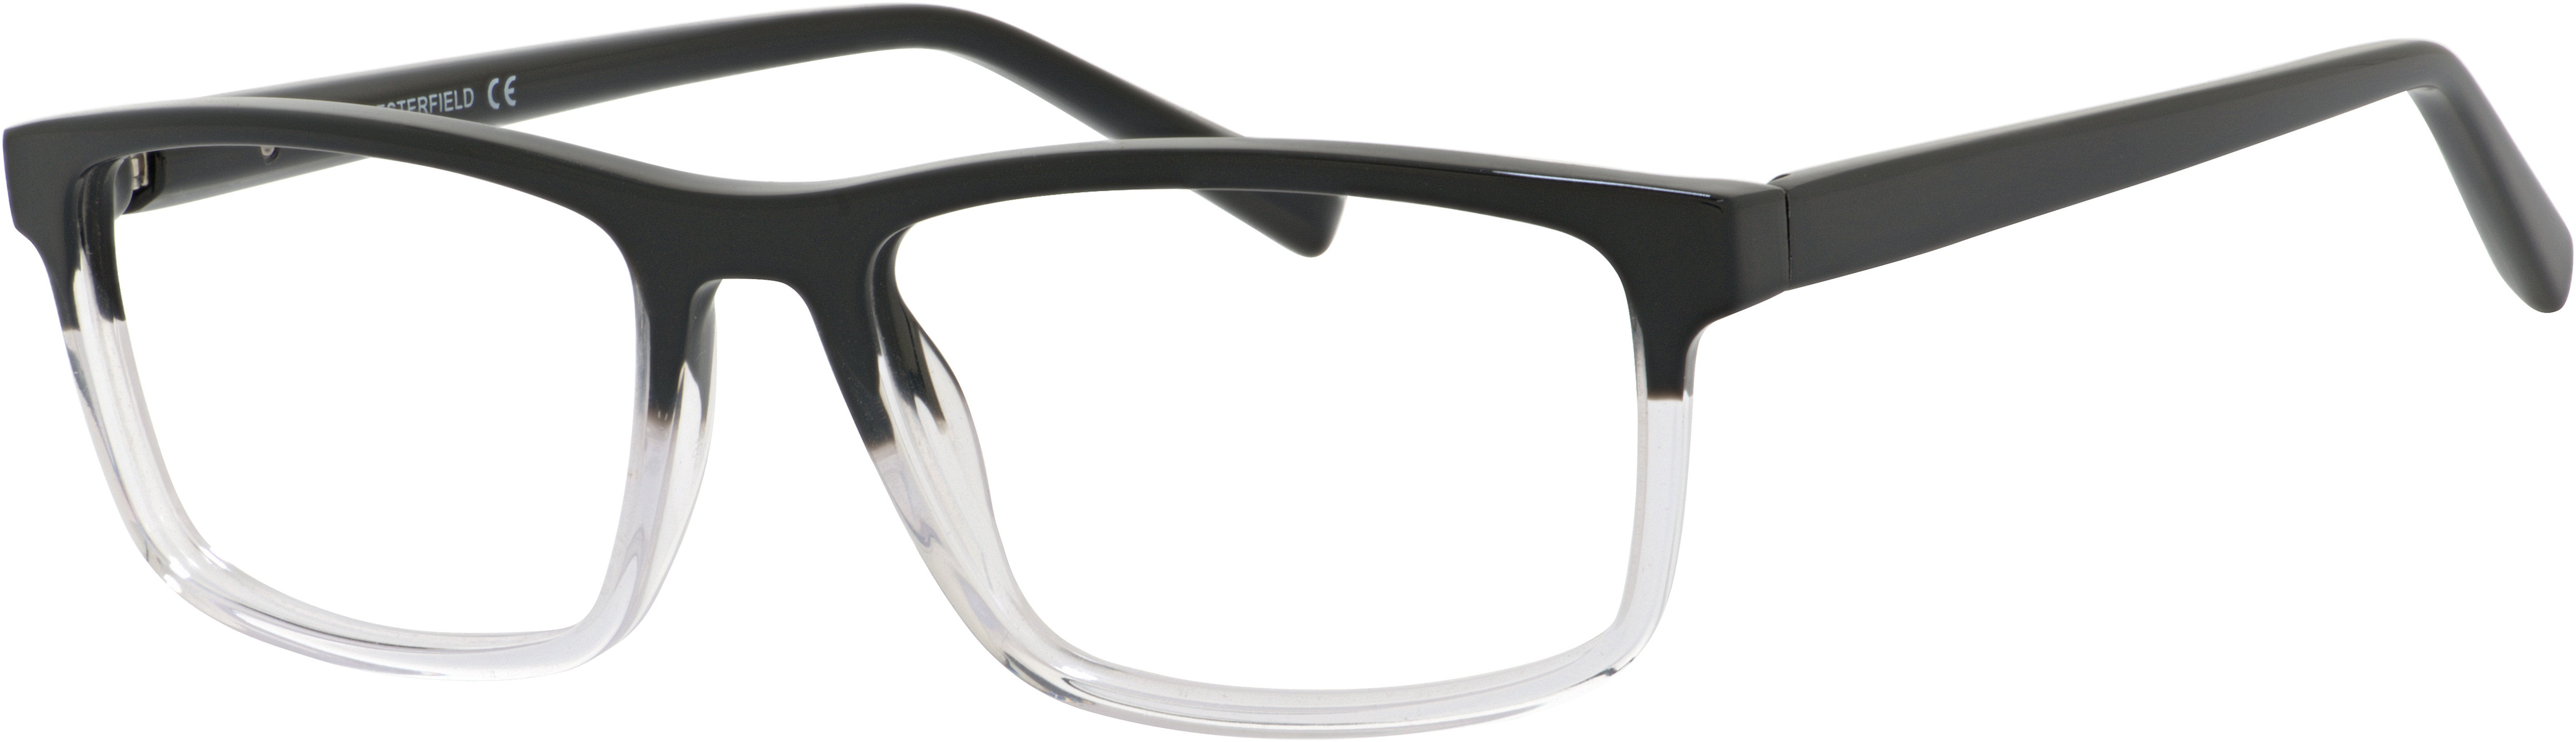  Chesterfield 58XL Rectangular Eyeglasses 07C5-07C5  Black Crystal (00 Demo Lens)